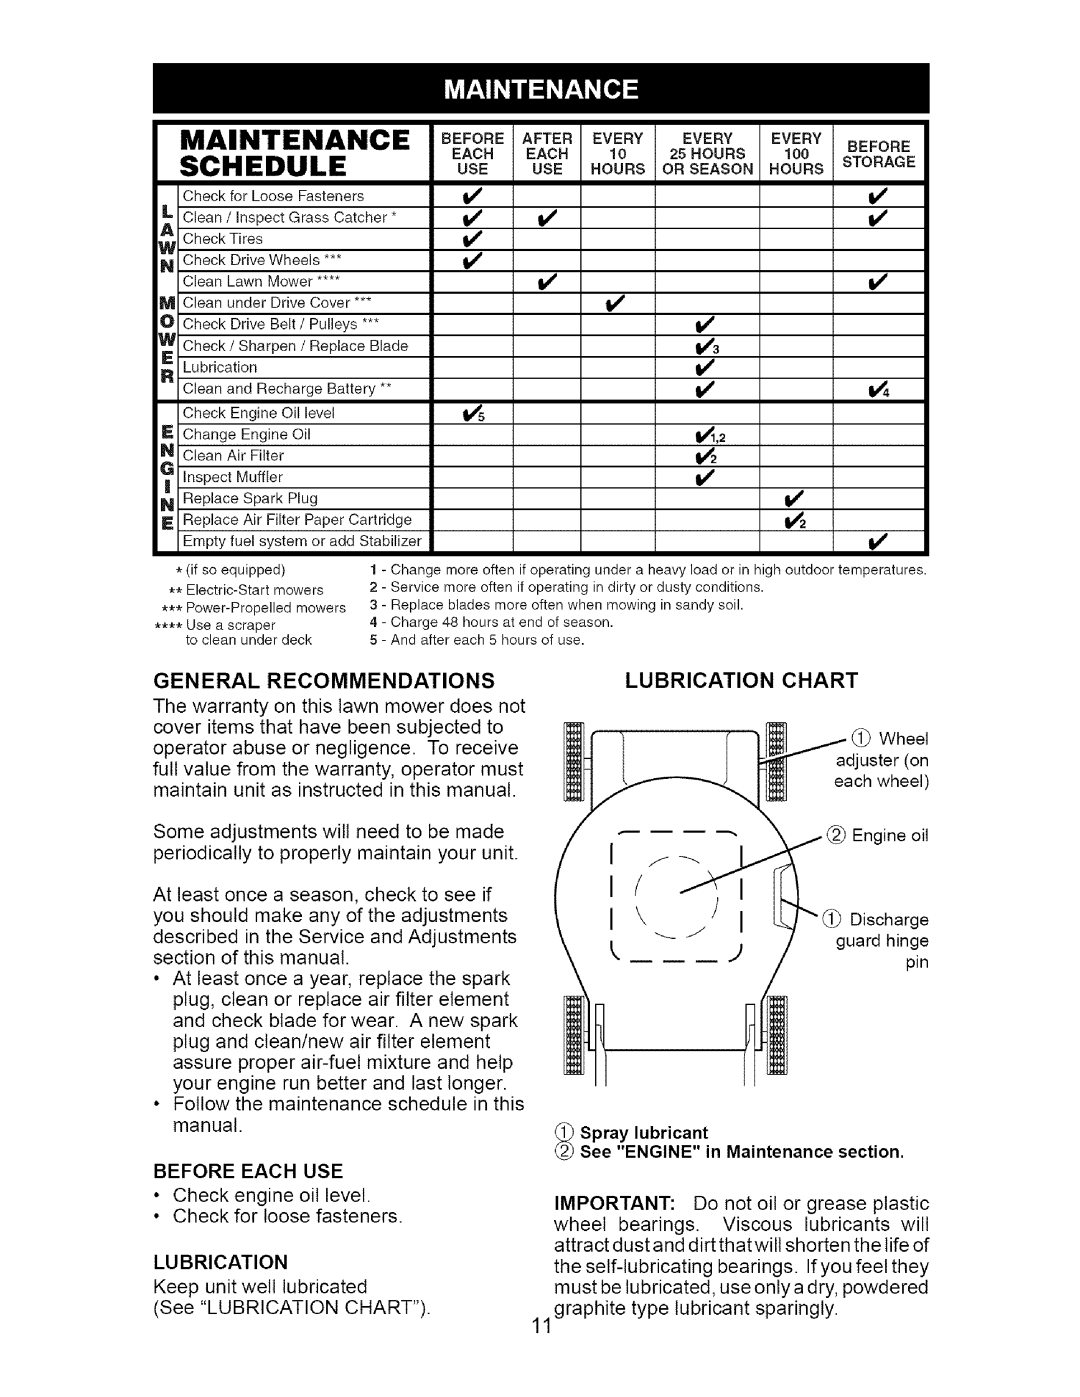 Craftsman 917.385140 Schedule, vv v v3 vl, General Recommendations, _ Spray lubricant, See ENGINE in Maintenance section 